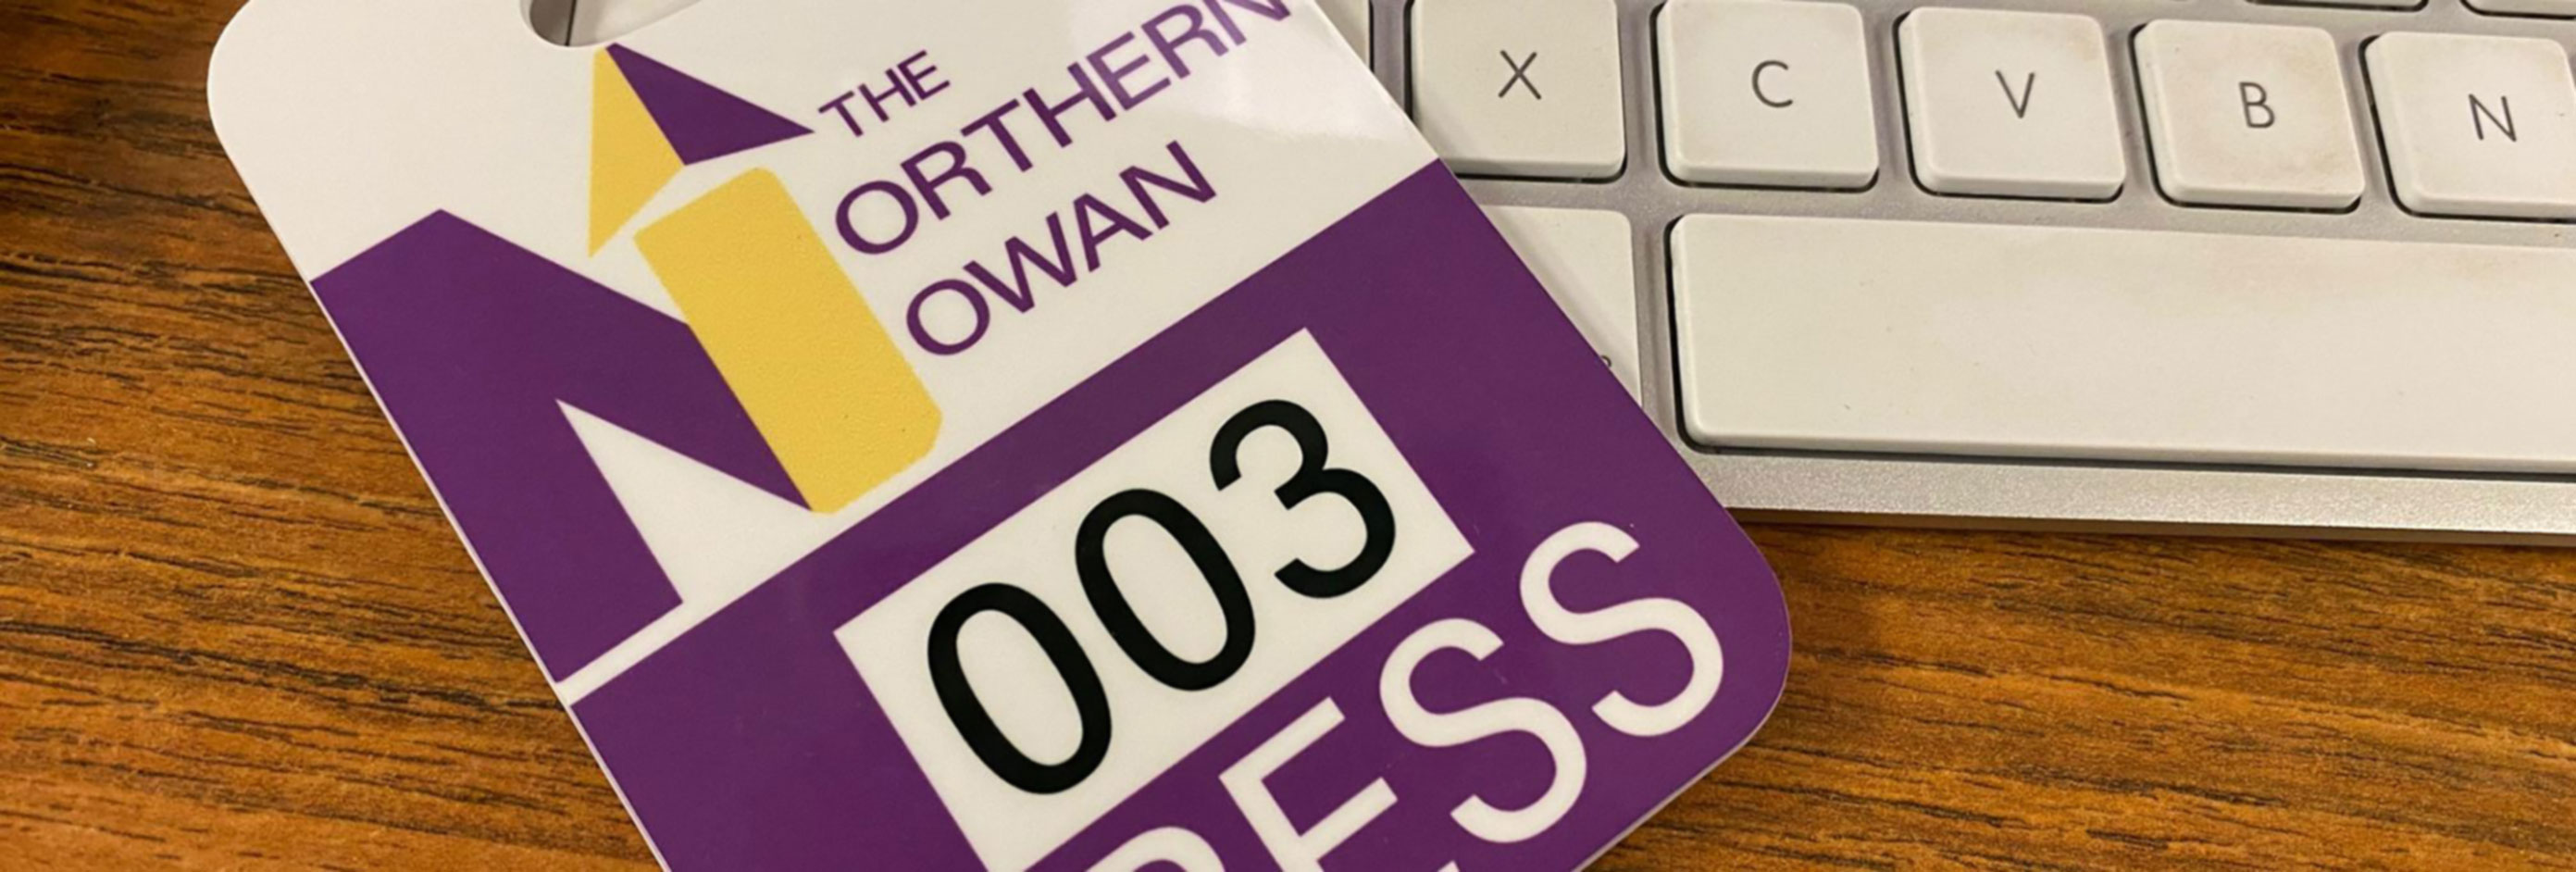 Northern Iowan Press Pass